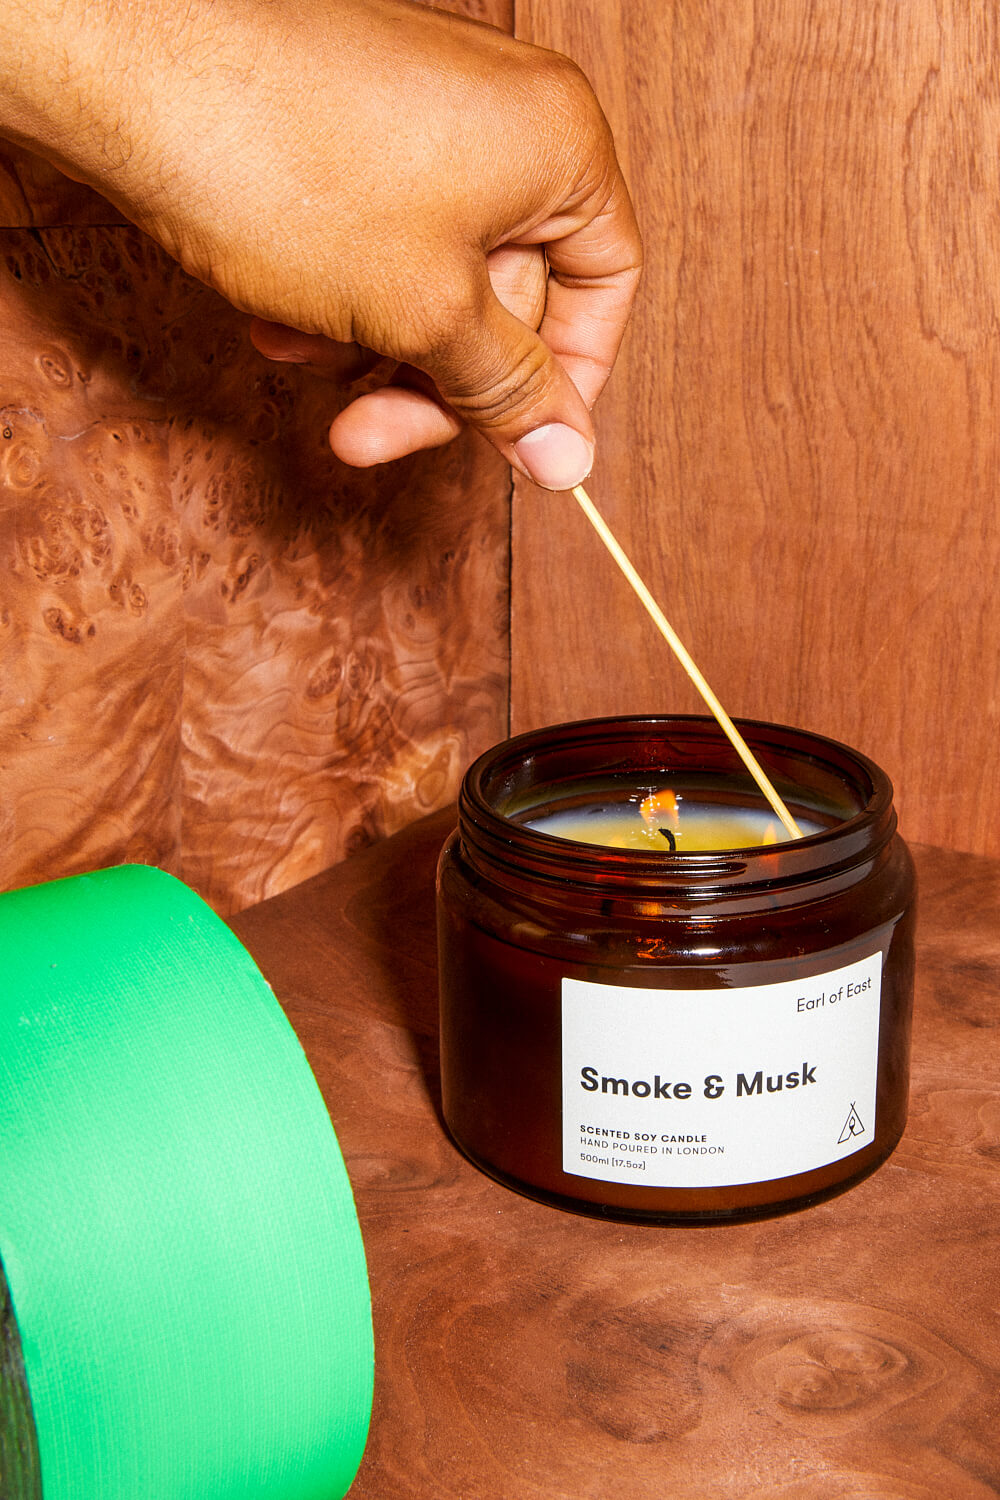 Smoke & Musk | 500ml | 3 Wick Soy Wax Candle | by Earl of East - Lifestory